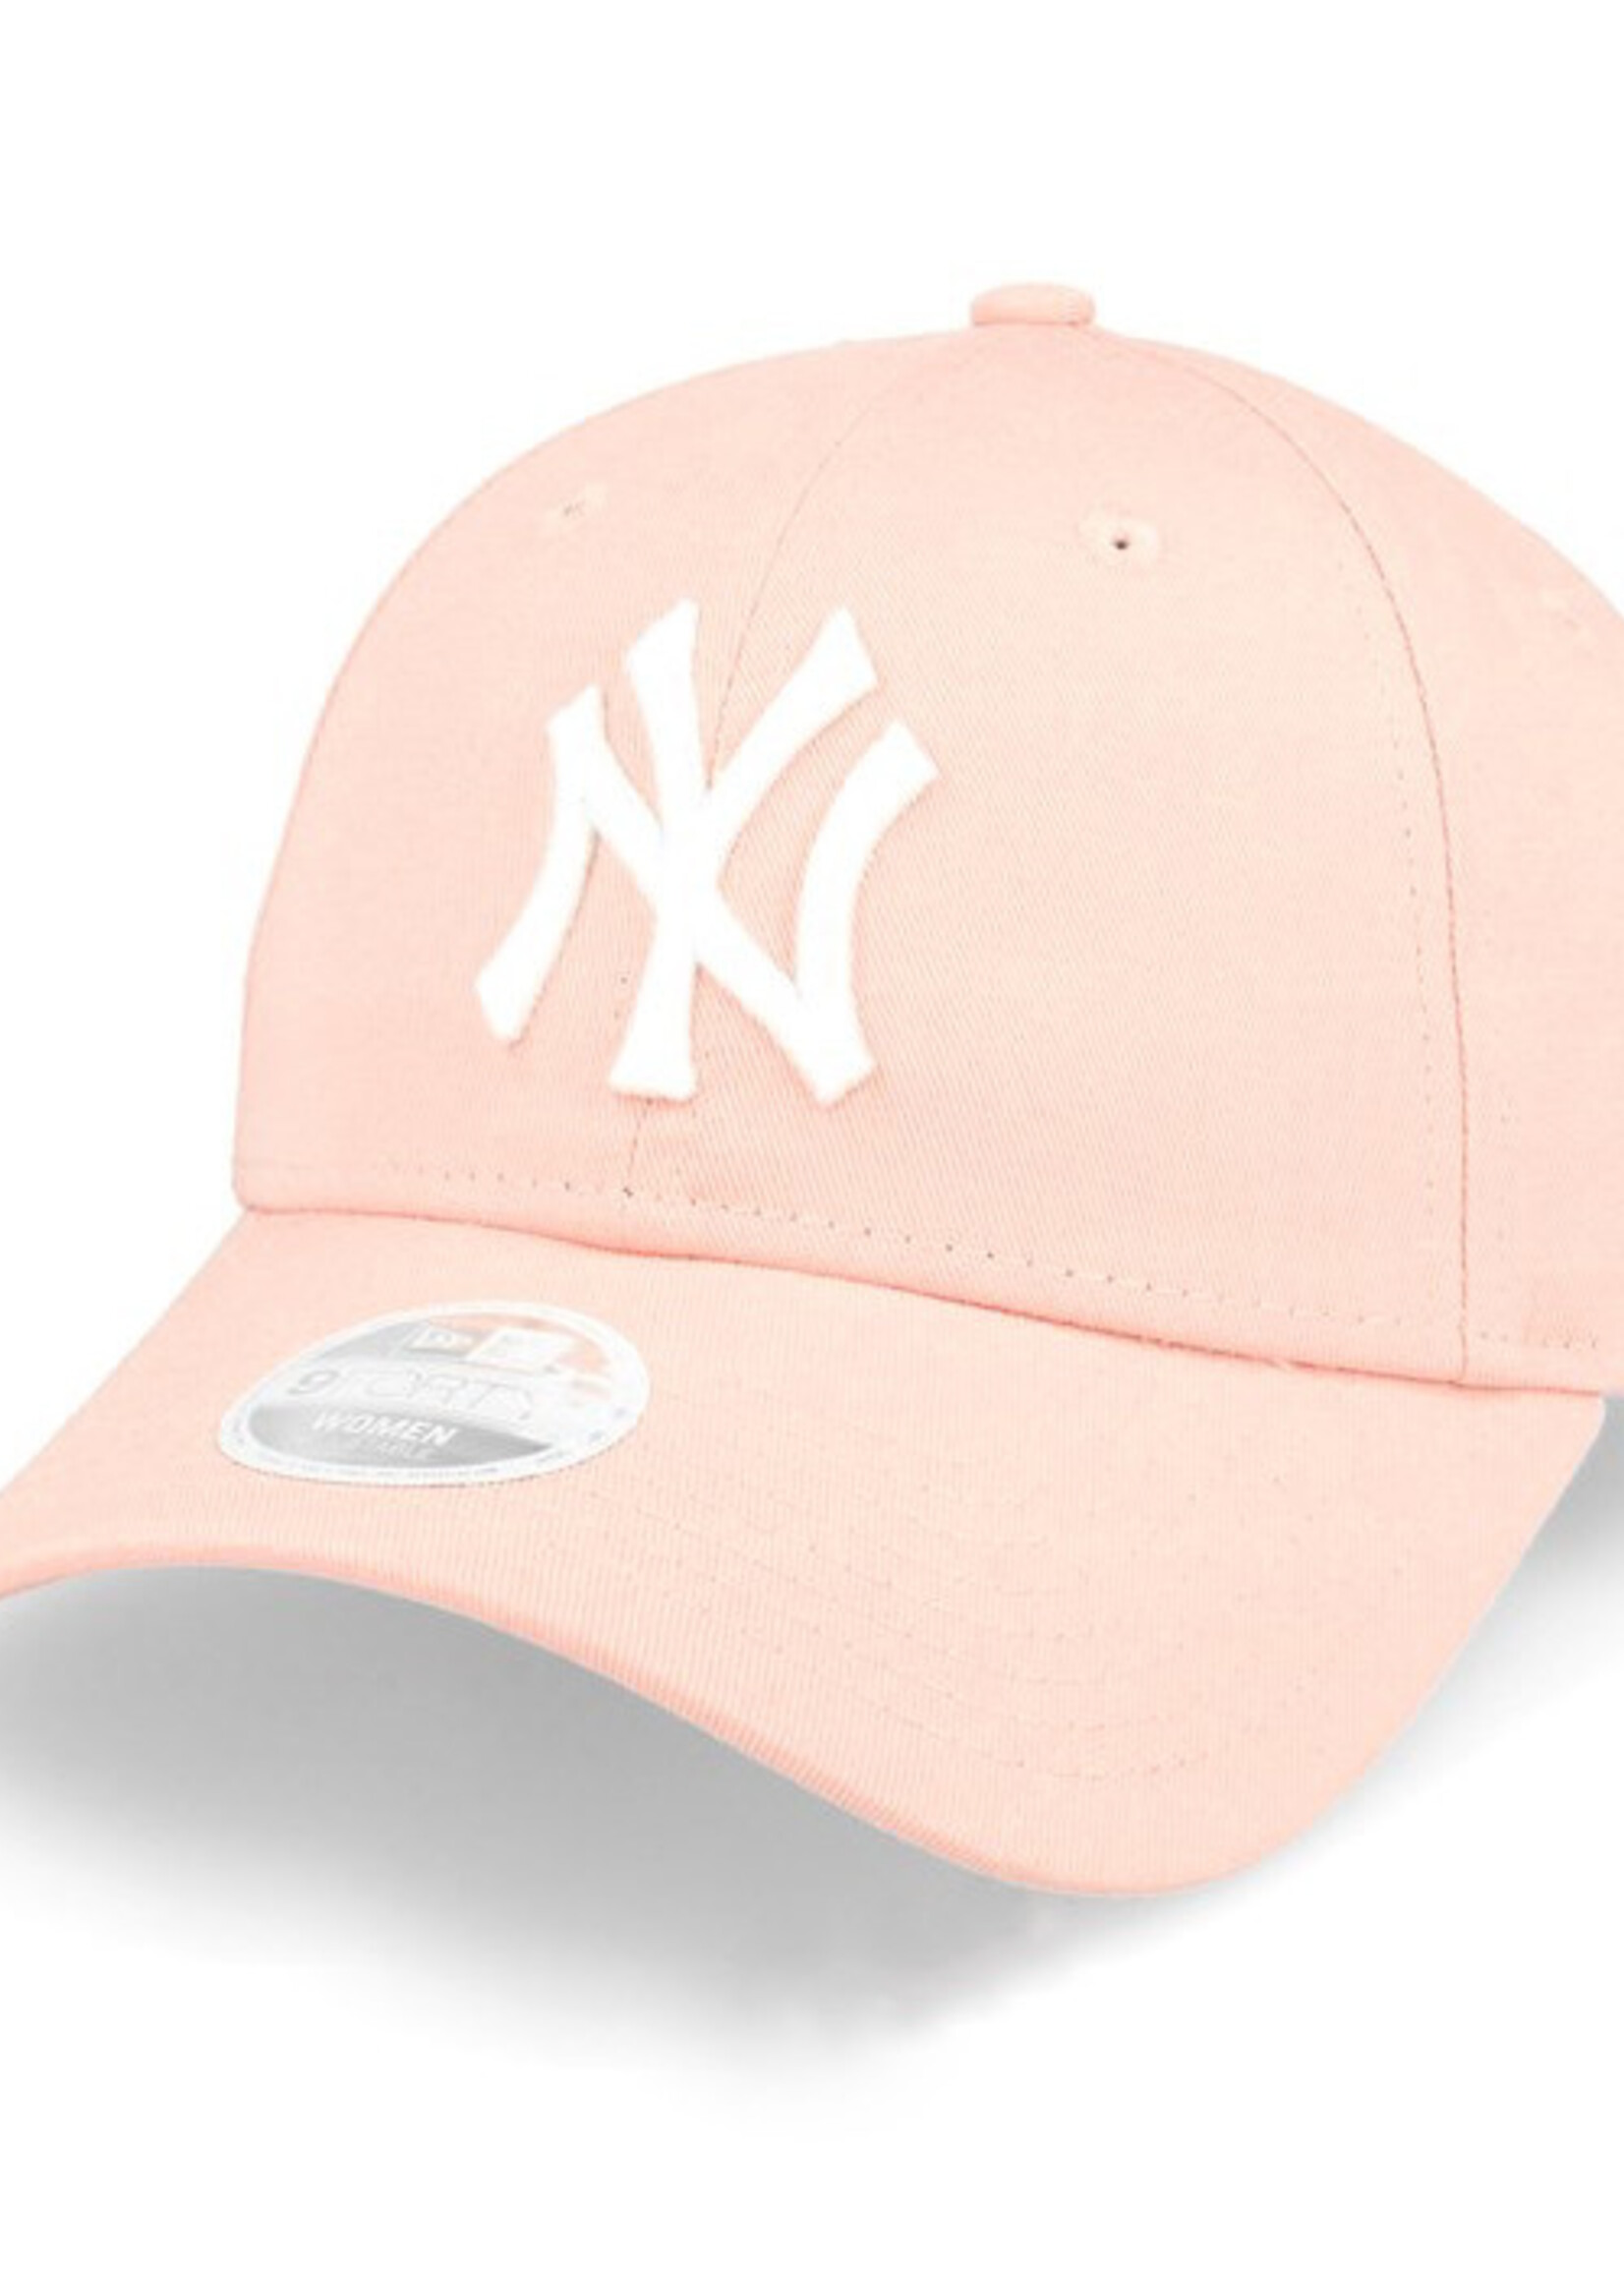 New Era New Era New York Yankees MLB 9Forty Cap Women Light Pink